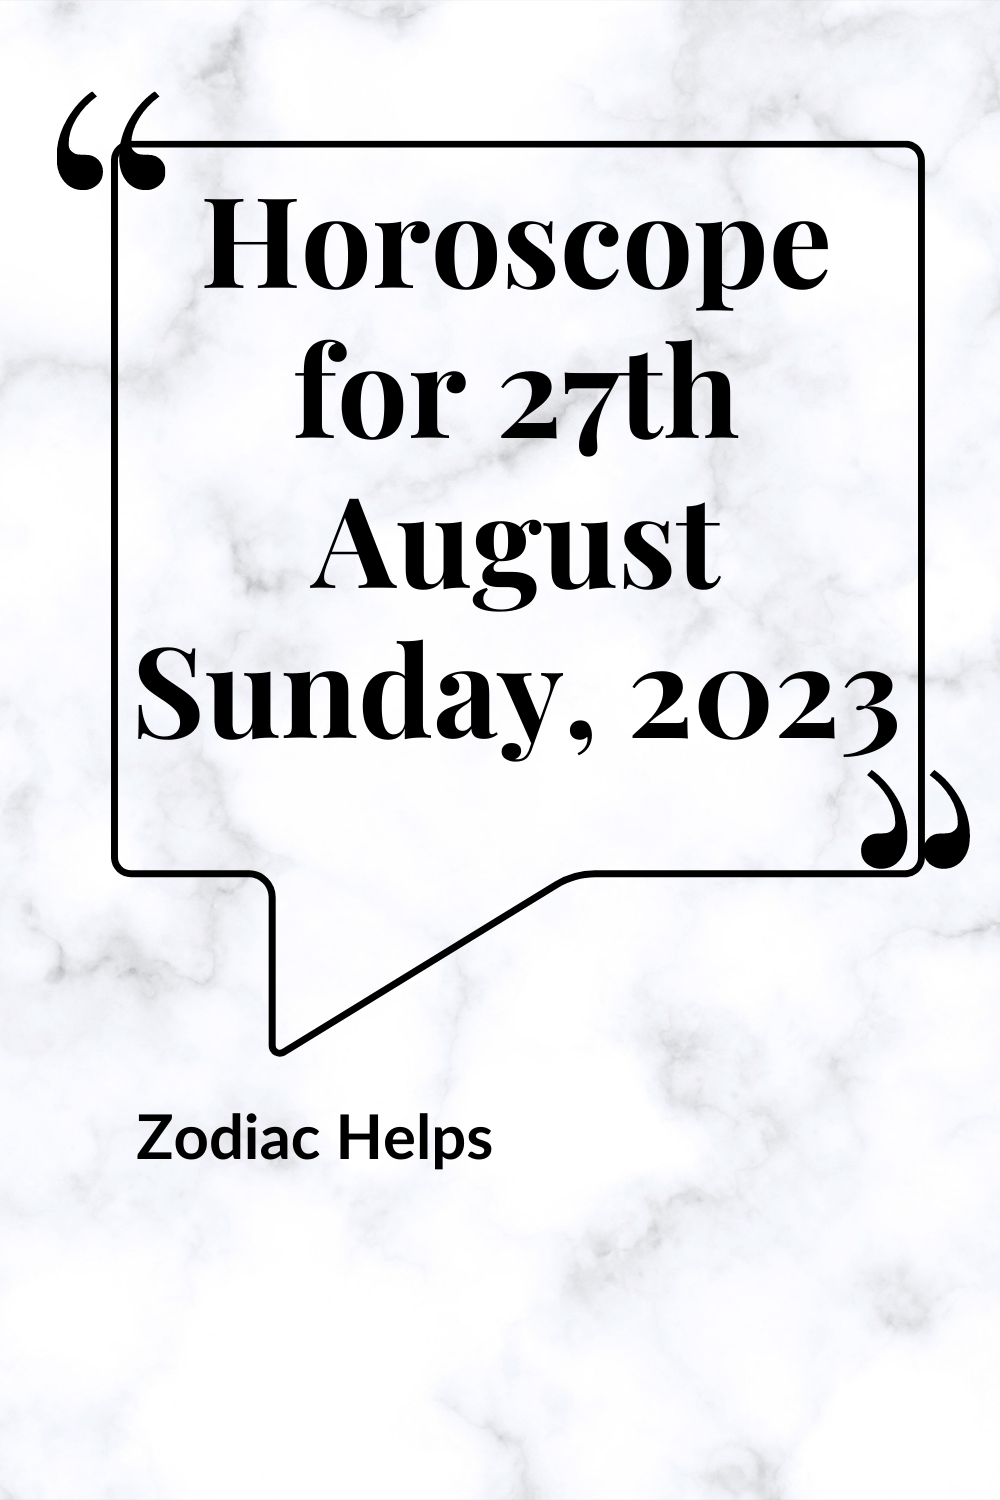 Horoscope for 27th August Sunday, 2023